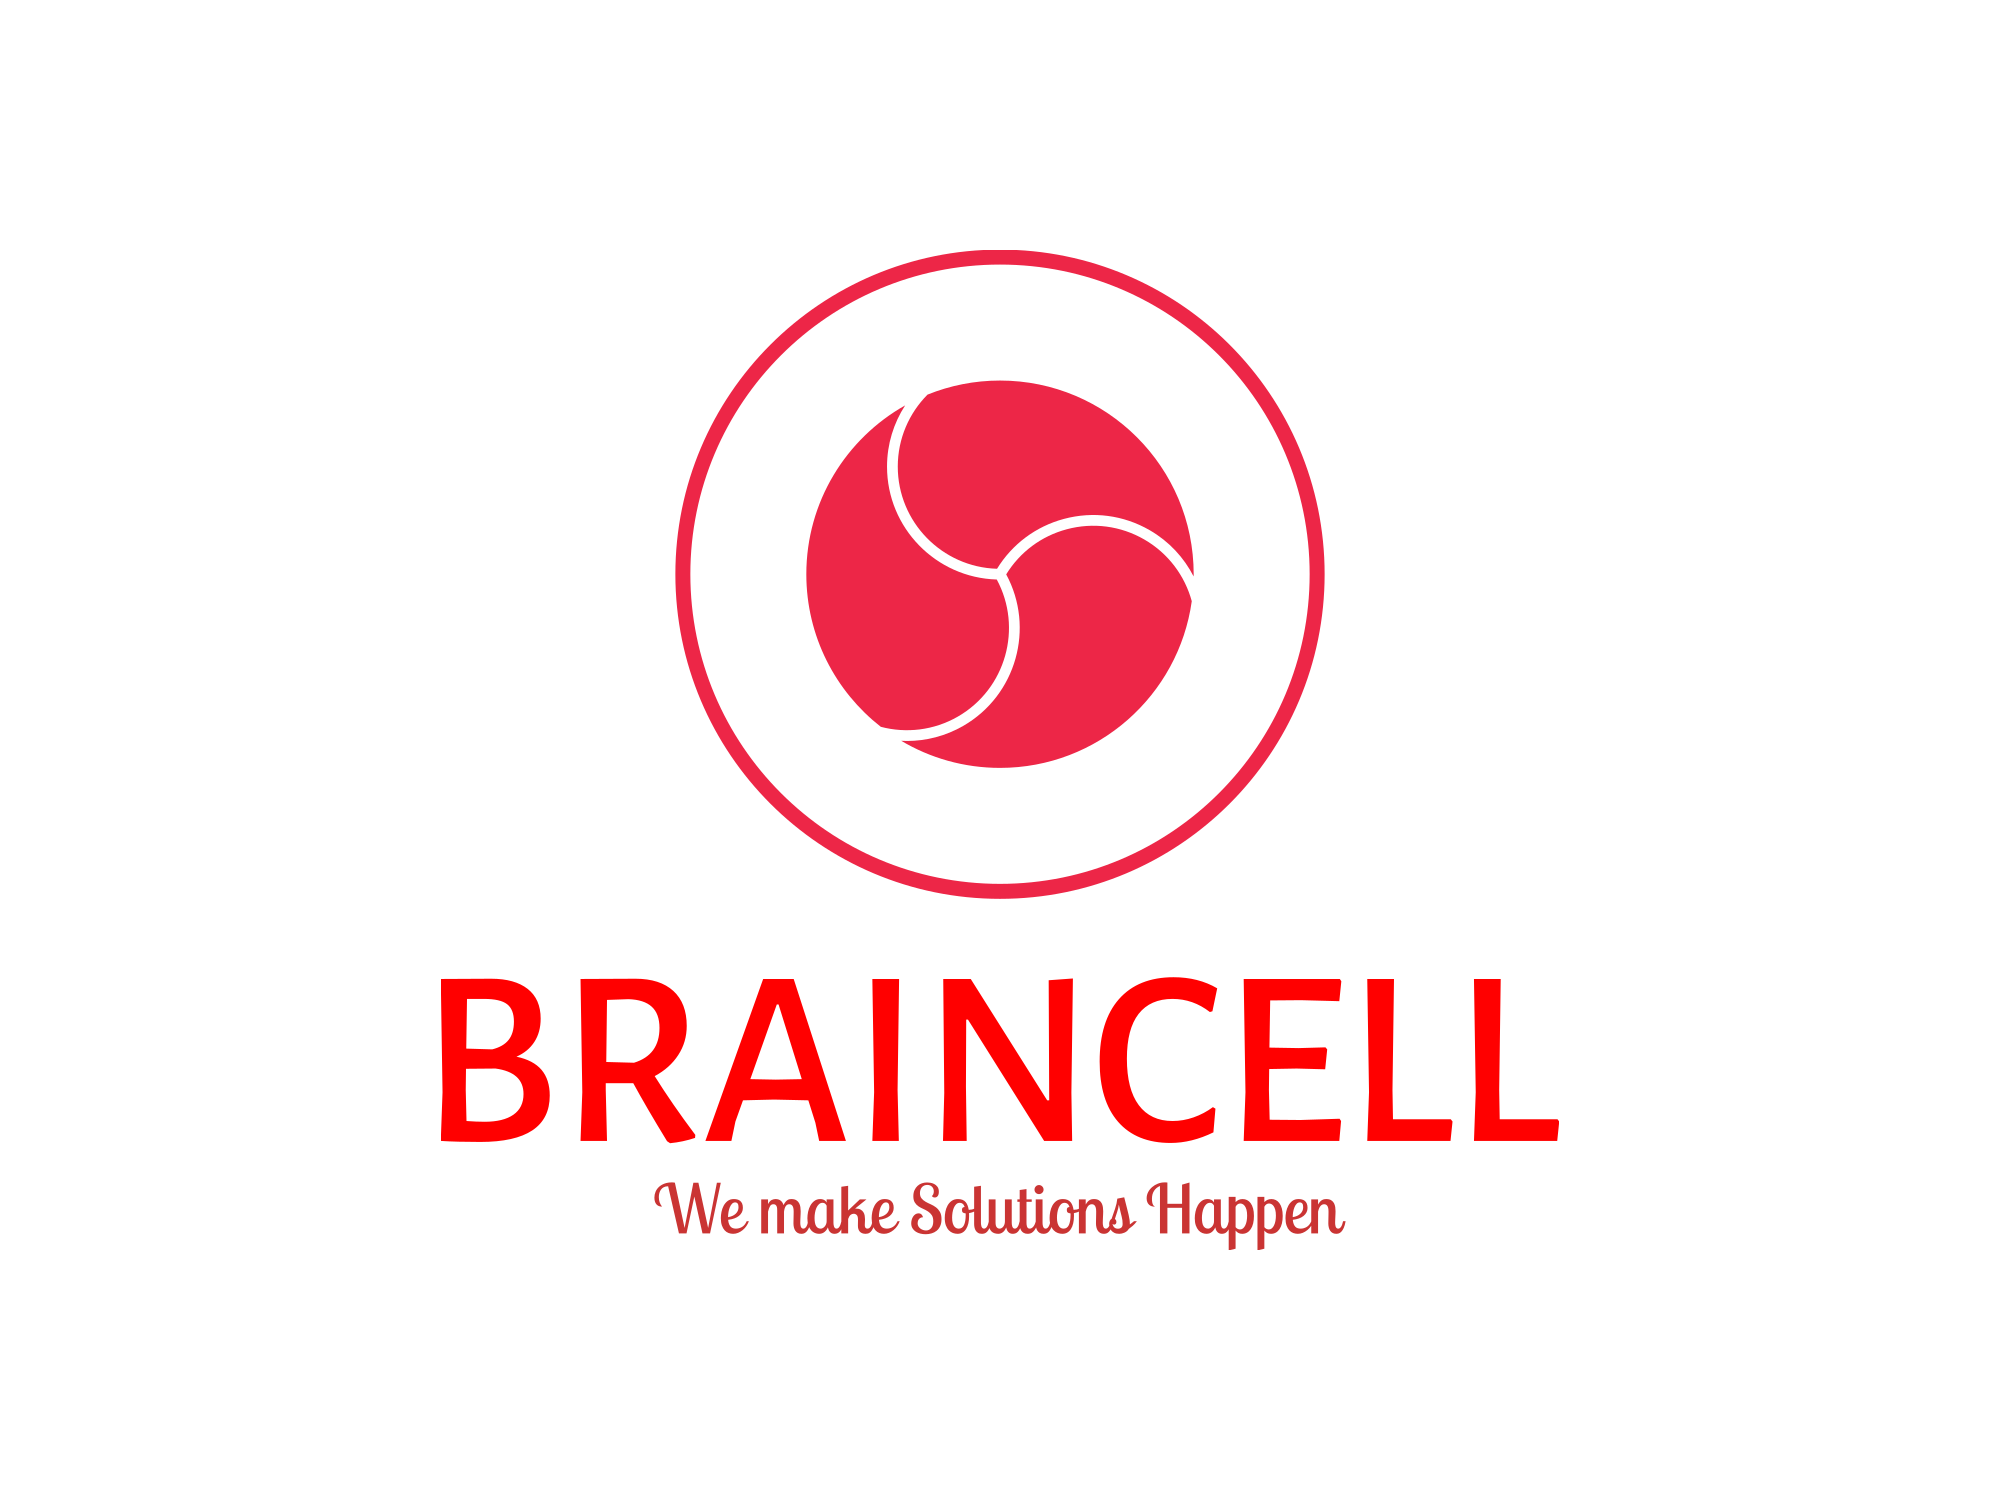 Braincell